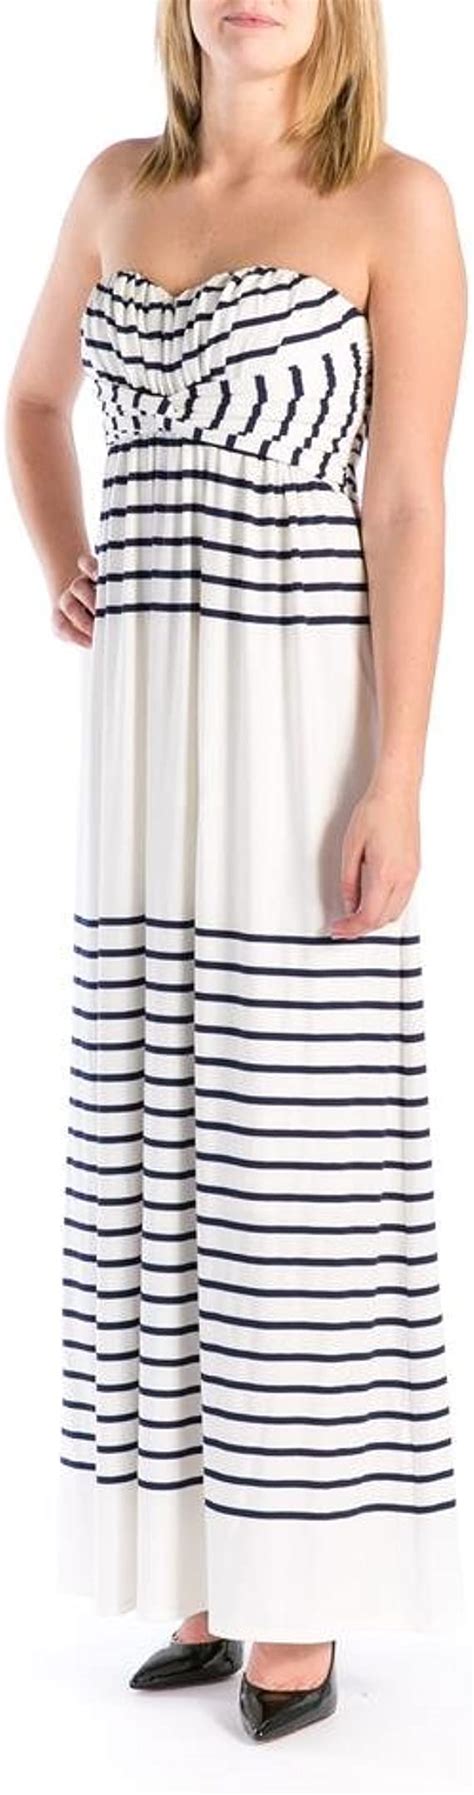 Jessica Simpson Strapless Striped Maxi Dress Navy White At